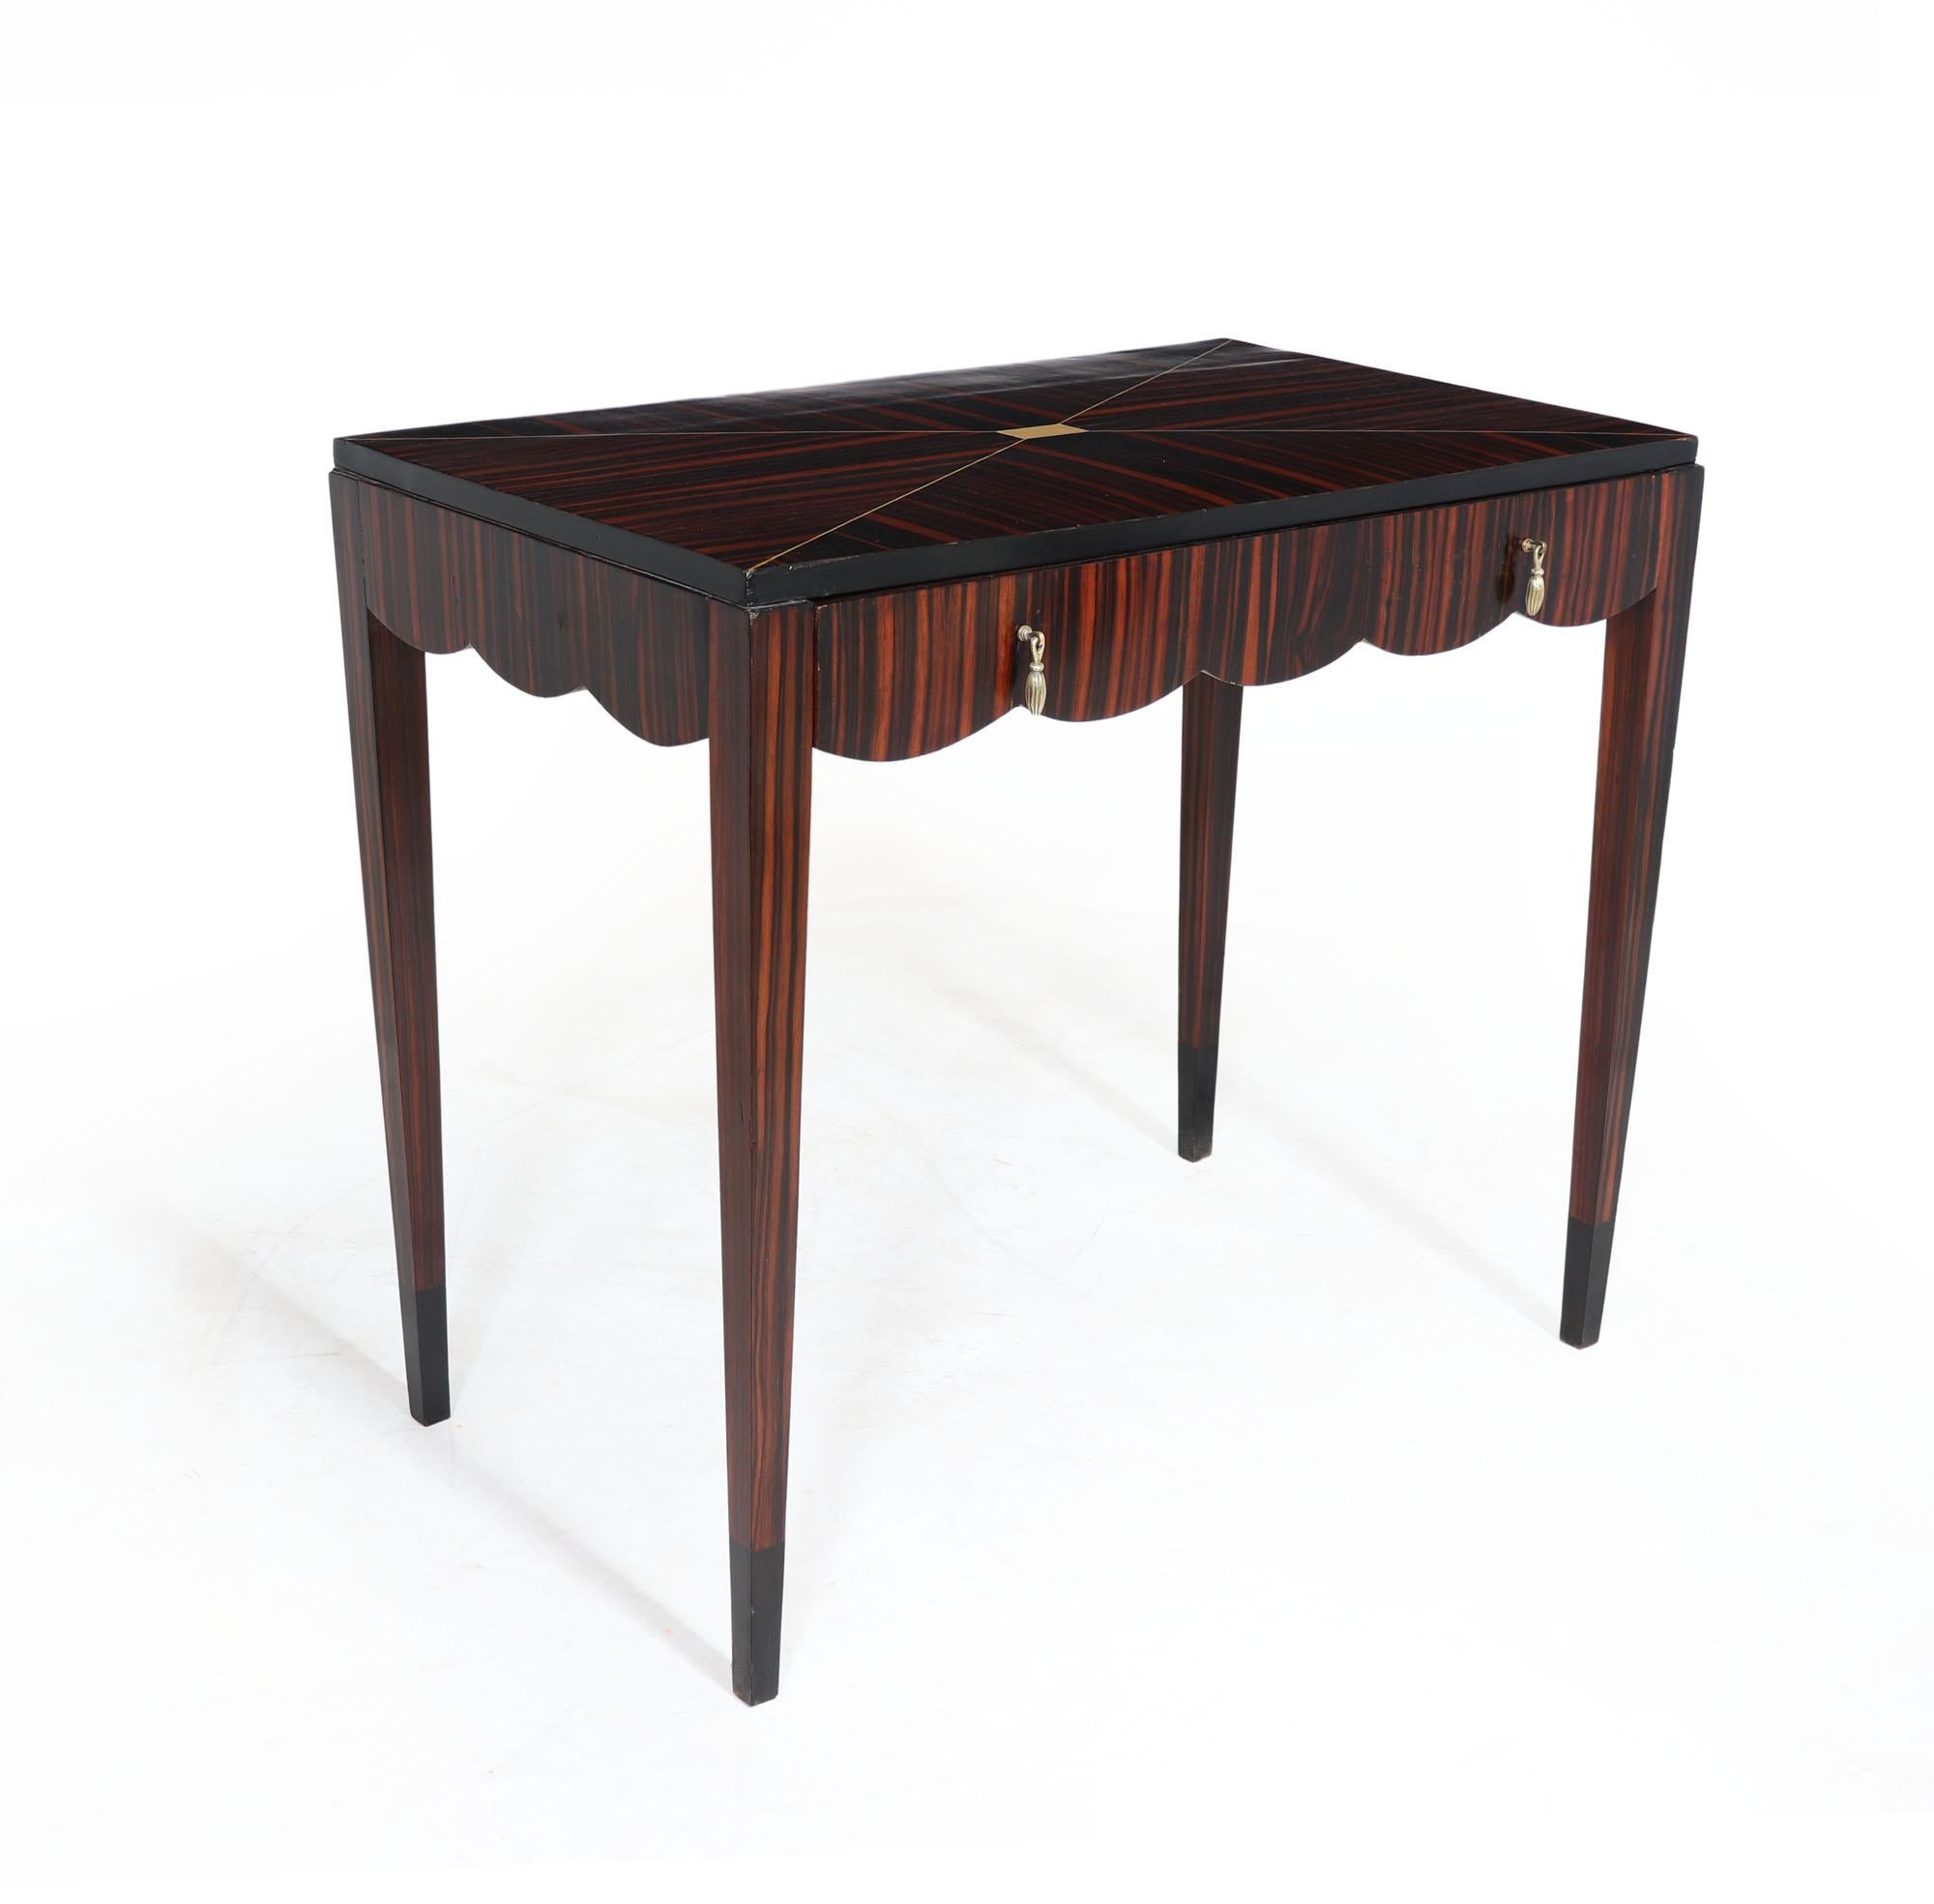 Early 20th Century French Art Deco Macassar ebony Side Table